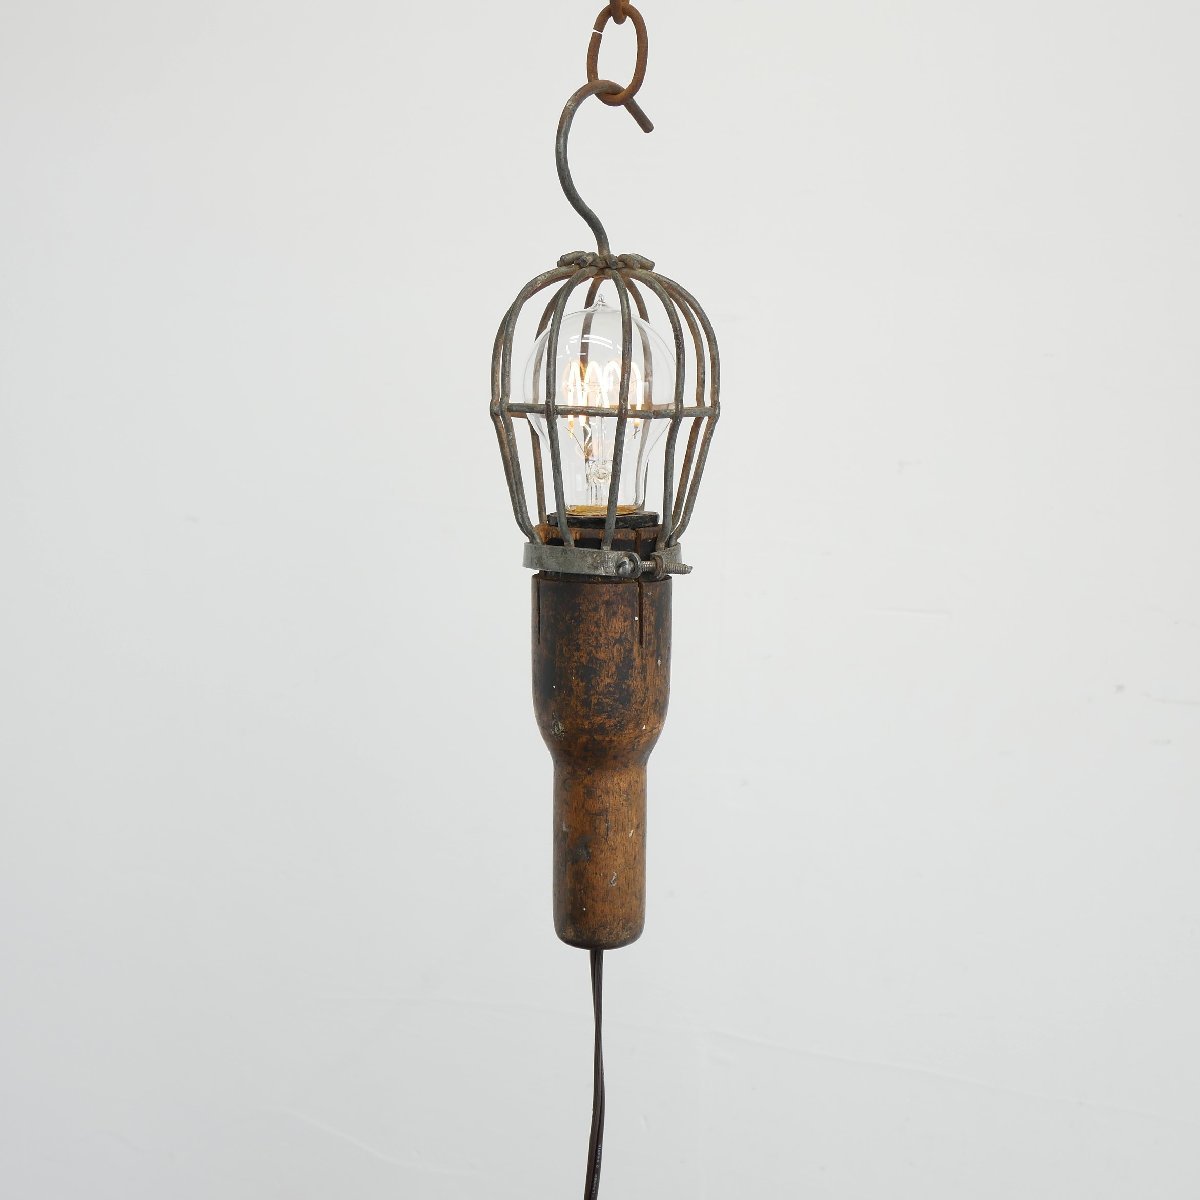 1920s-30s アメリカ インダストリアル ハンドランプ【#5338】アンティーク ヴィンテージ 照明 LEDエジソン電球 LA ファクトリー